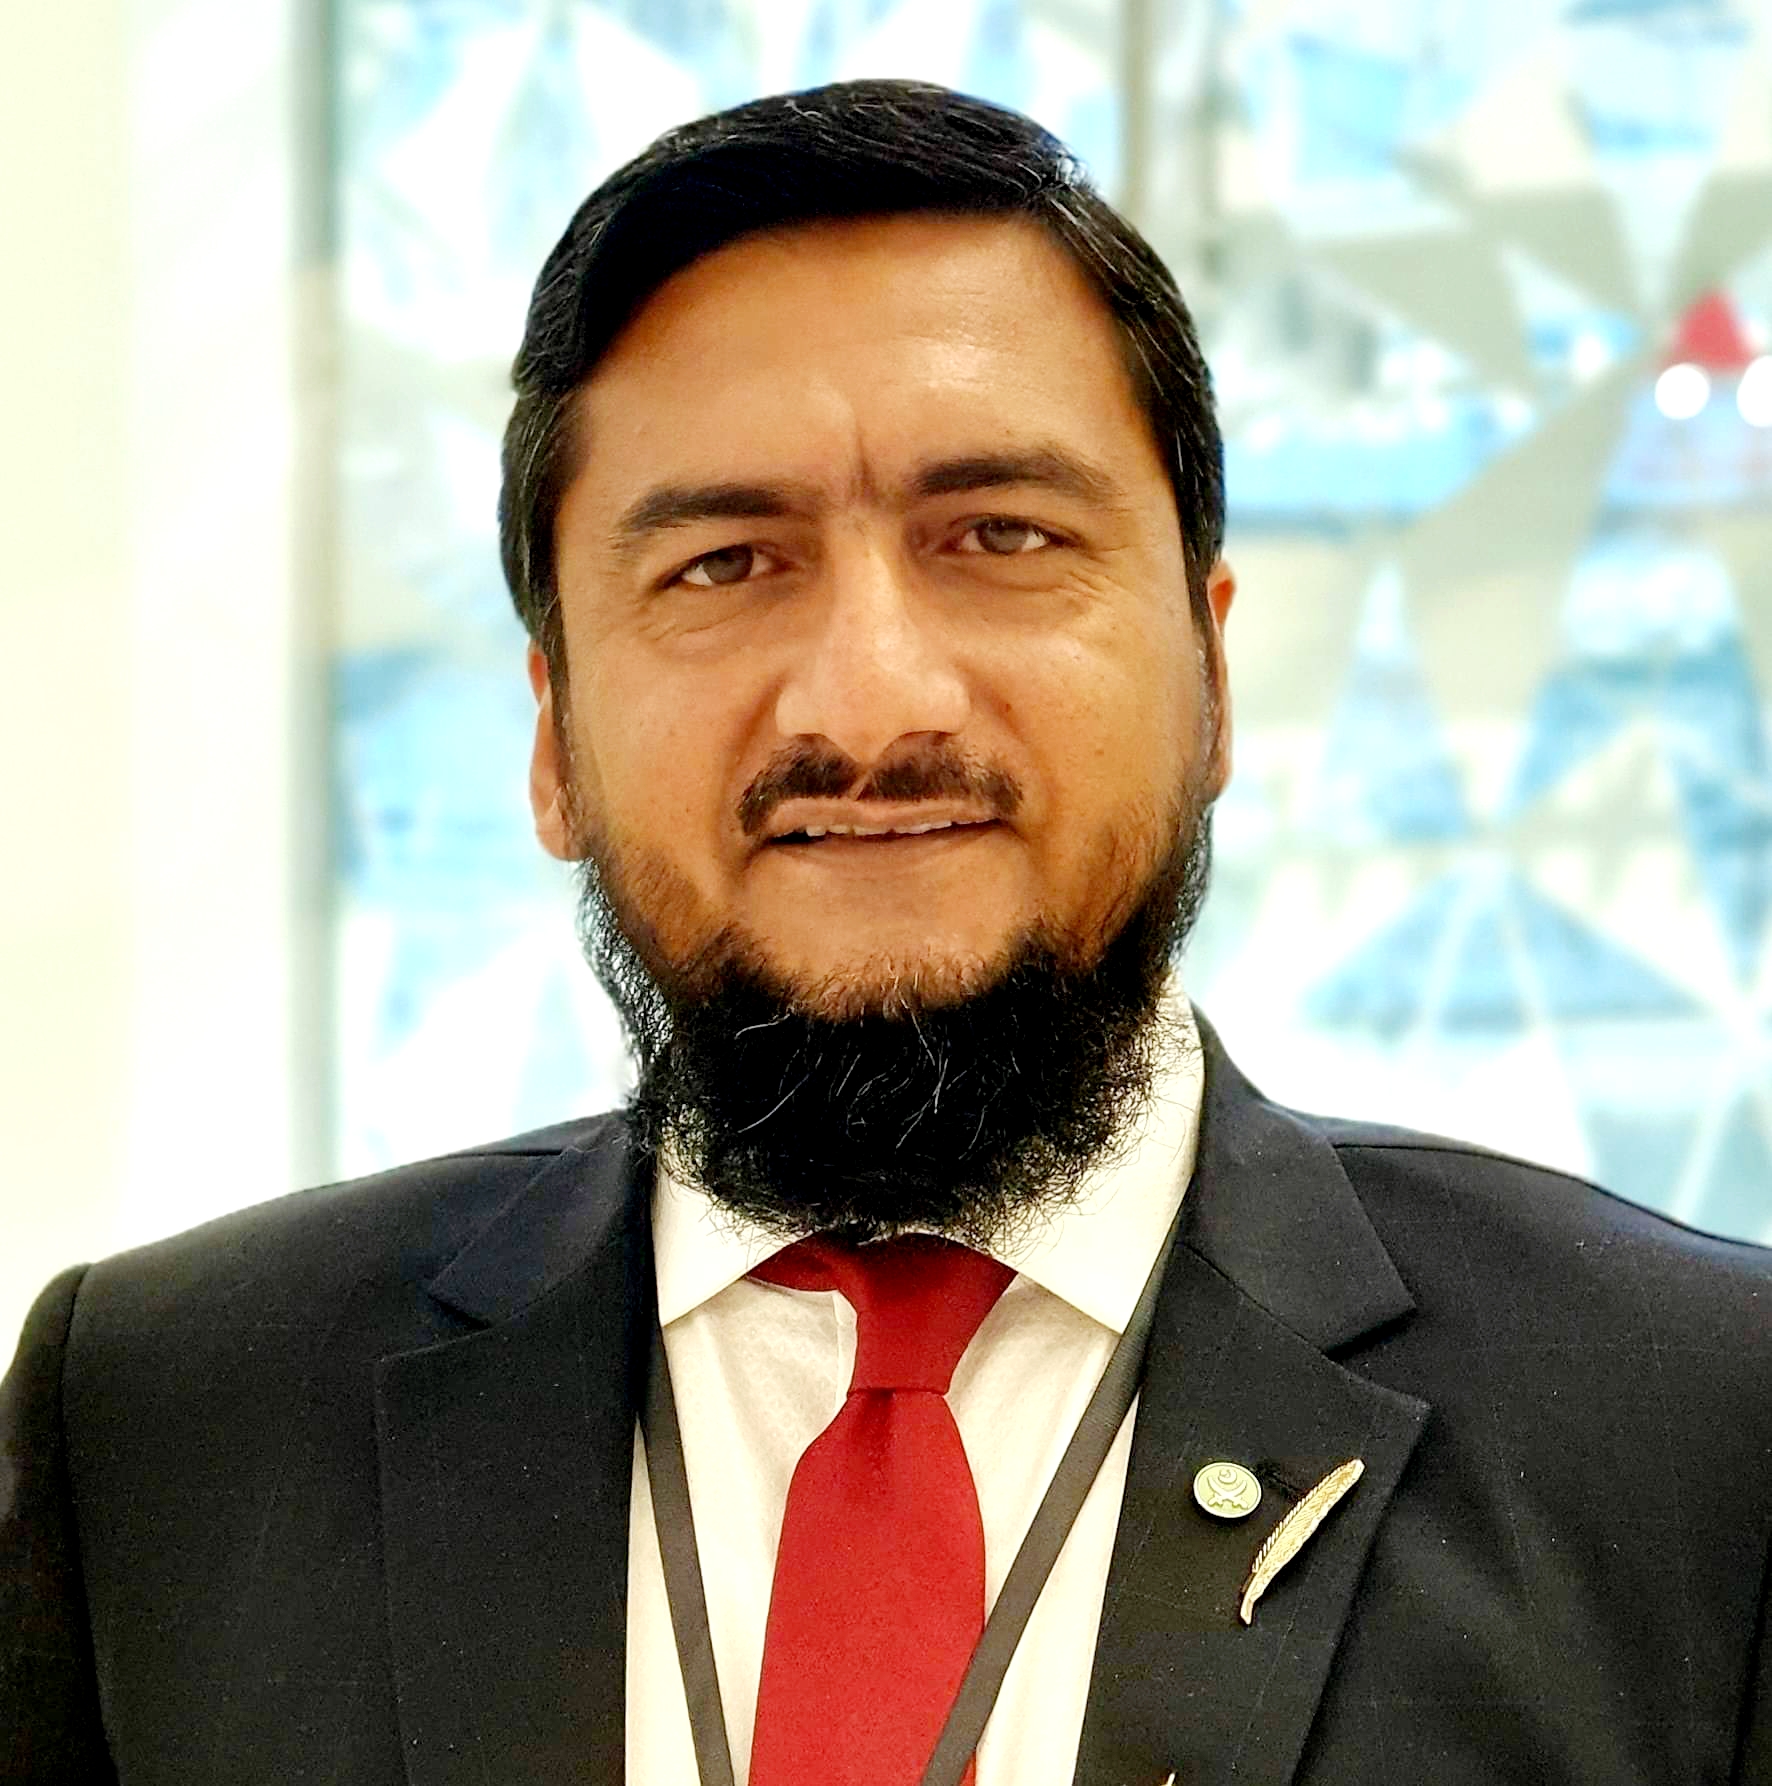 Dr Muhammad Samiullah